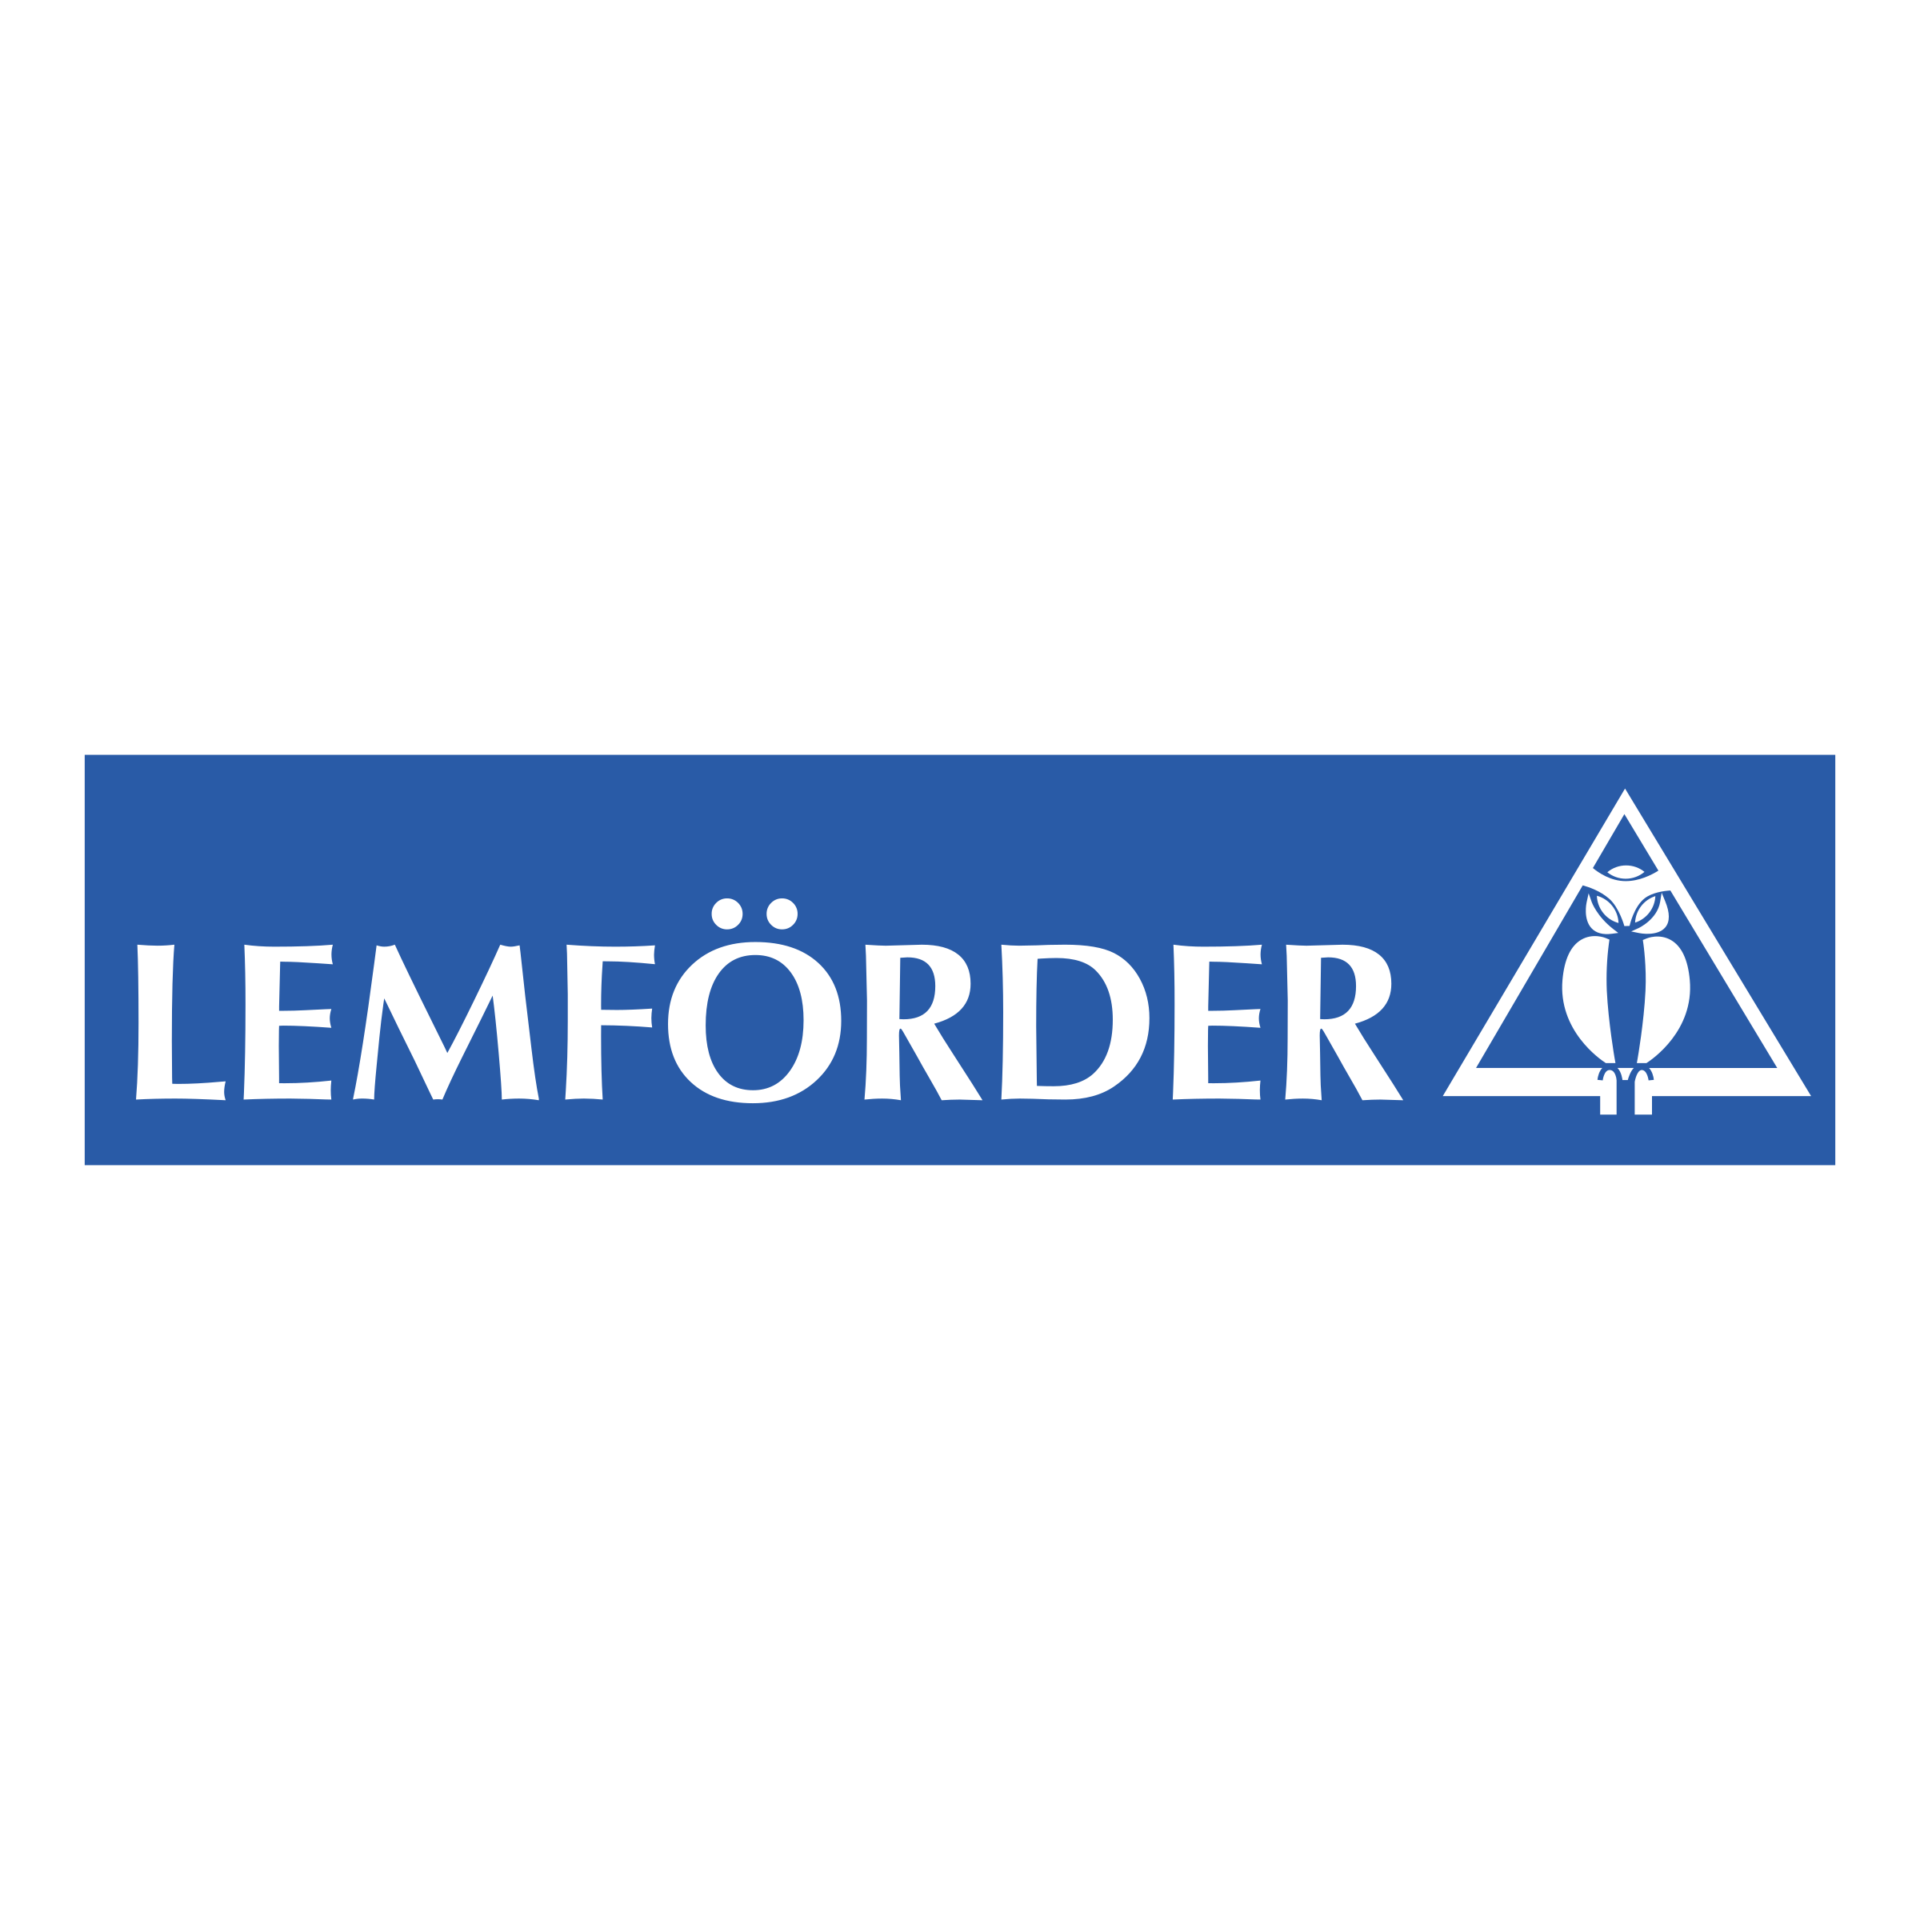 lemforder-3-logo-png-transparent